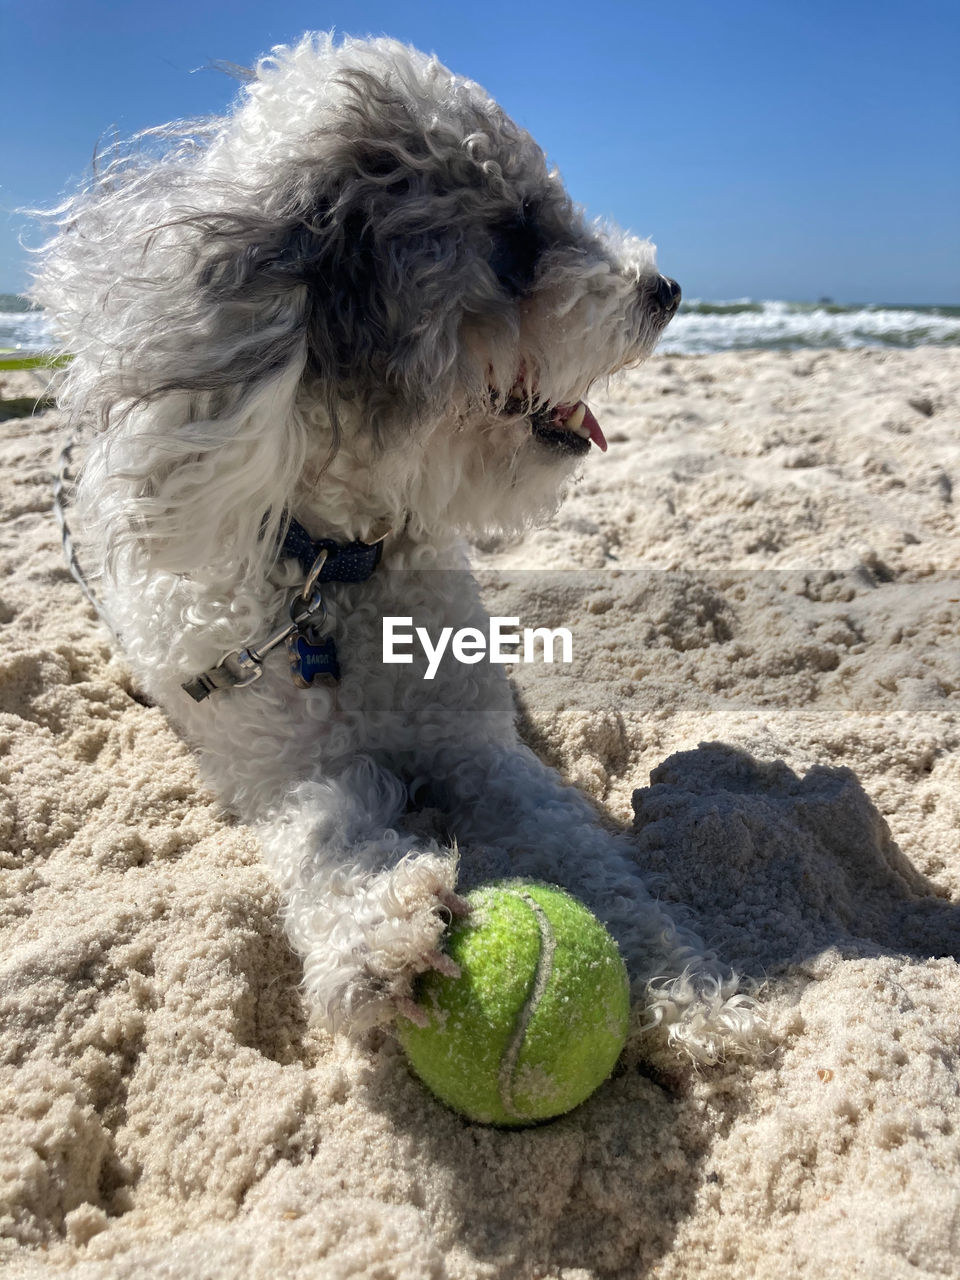 Dog on beach with tennis ball 